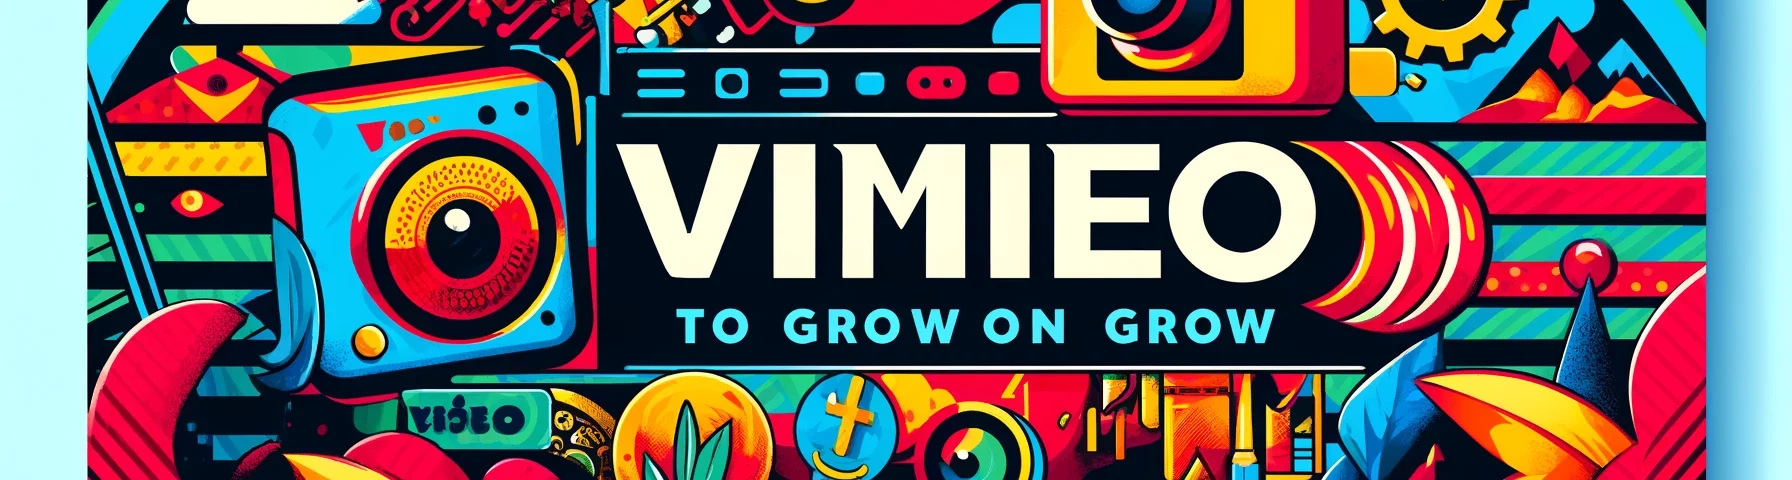 Tips to Grow on Vimeo